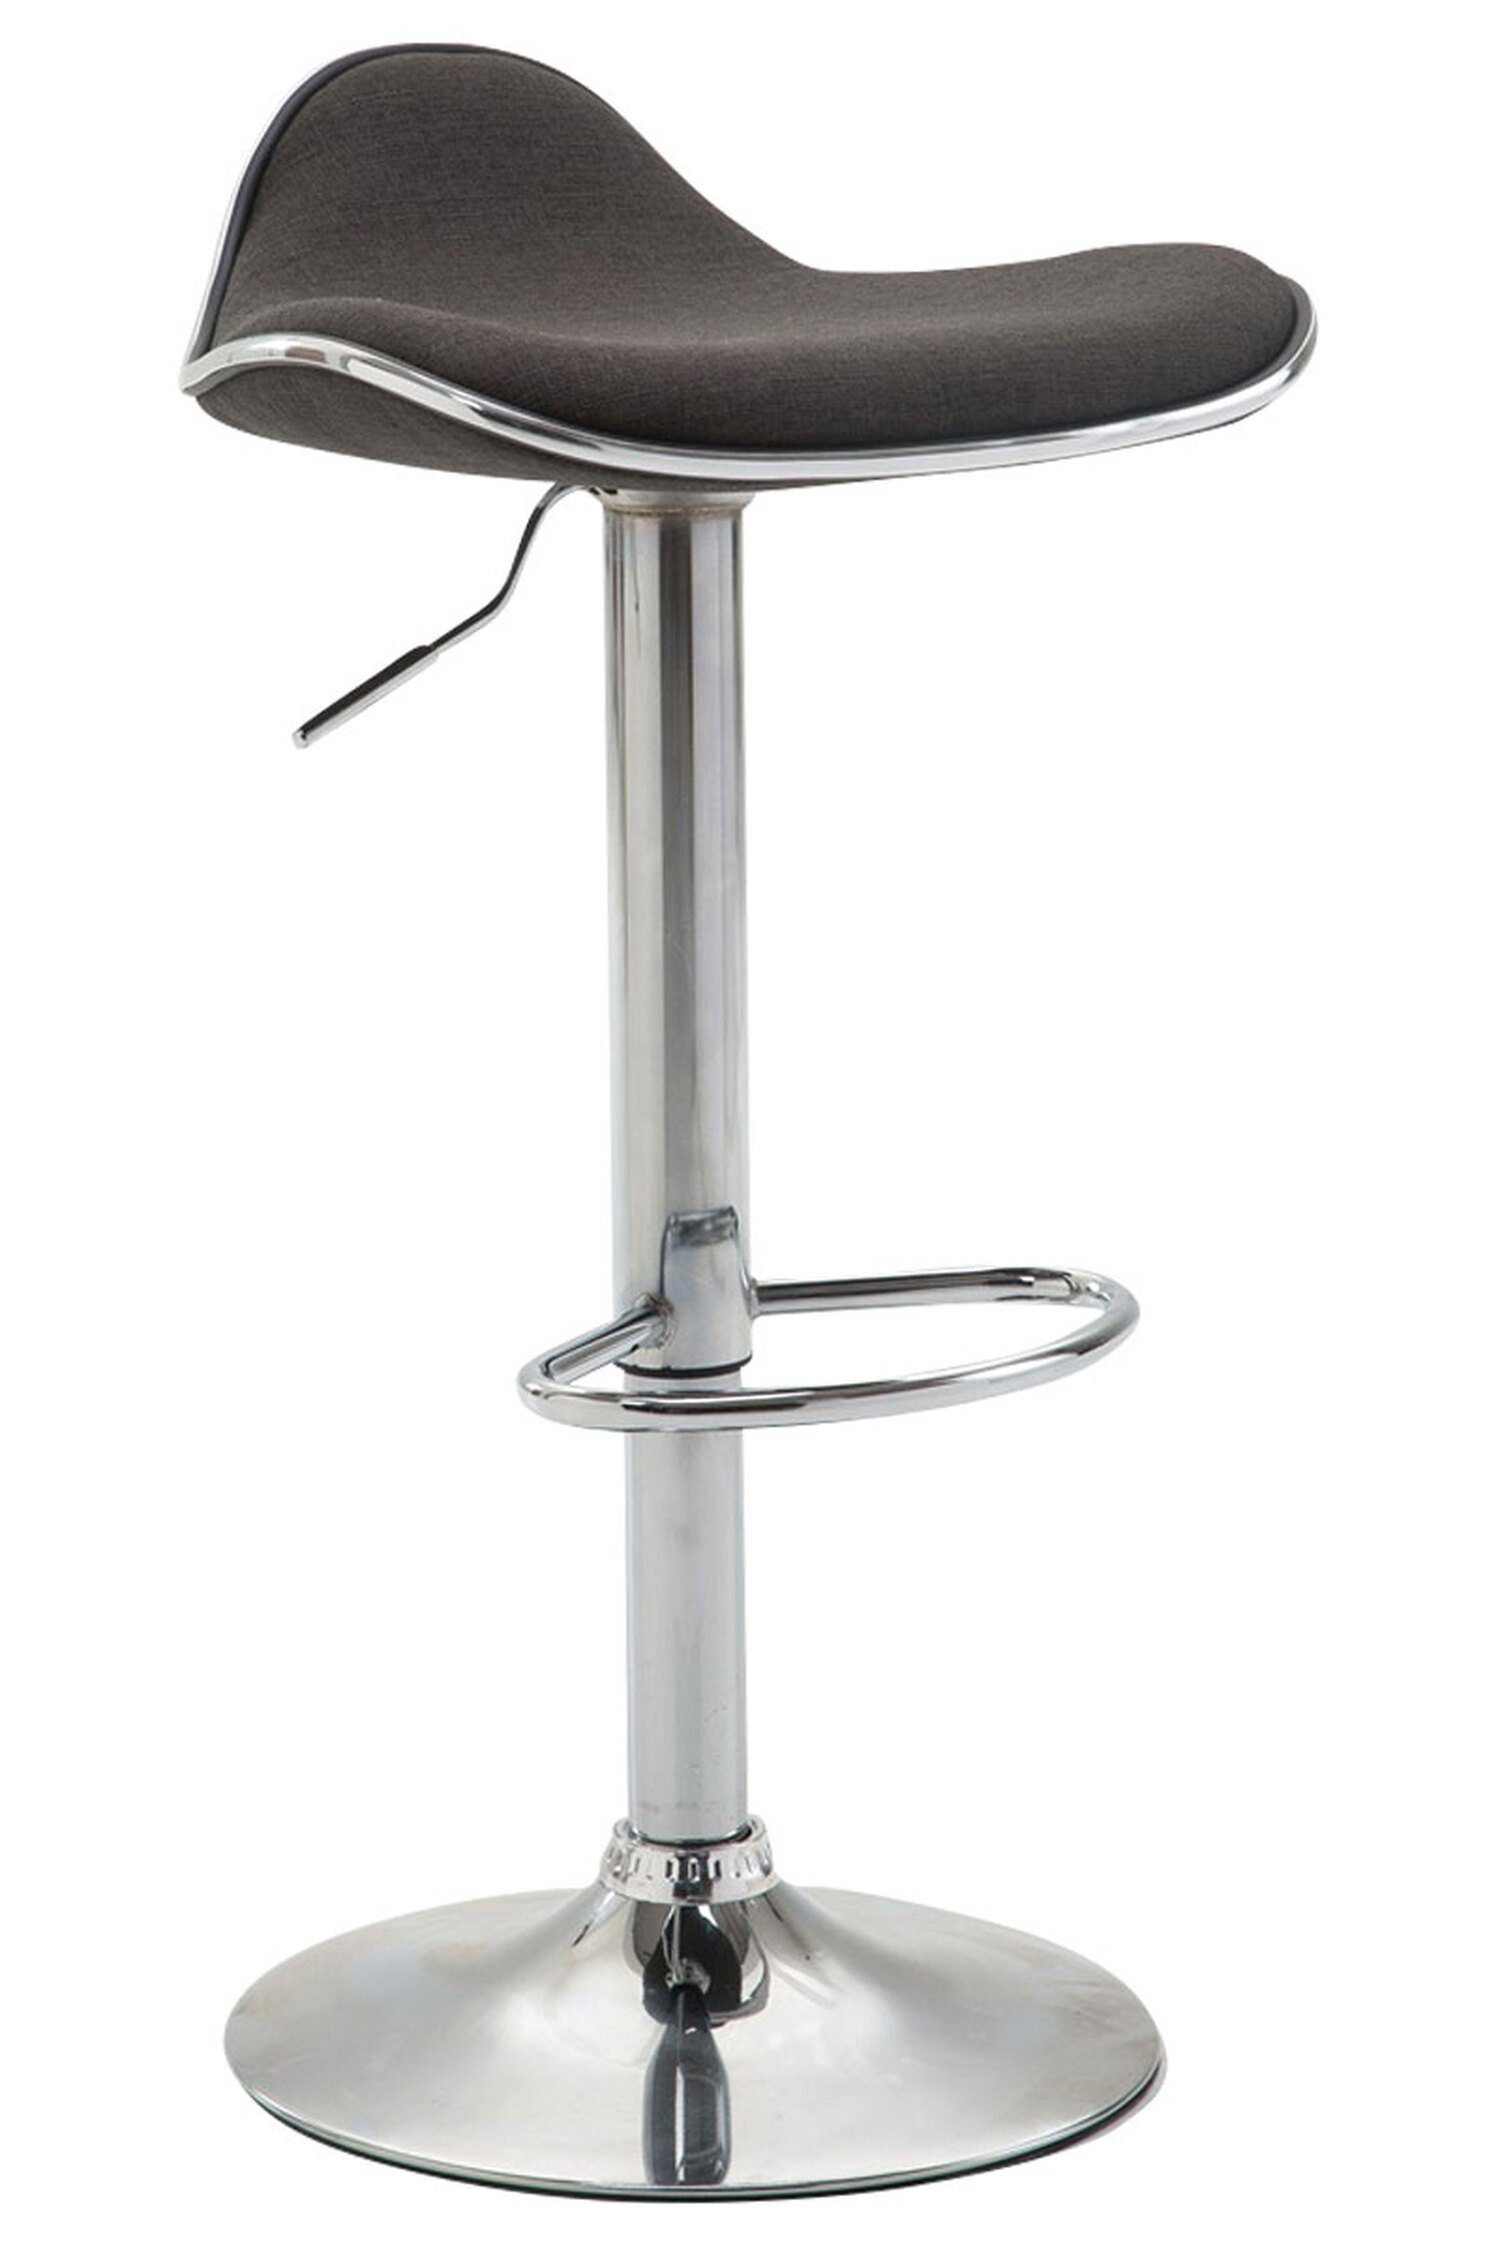 TPFLiving Barhocker Shangrila (Barstuhl höhenverstellbar - Hocker für Theke & Küche - Tresenhocker), 360° drehbar - chromfarbener Stahl - Sitzfläche: Stoff Dunkelgrau